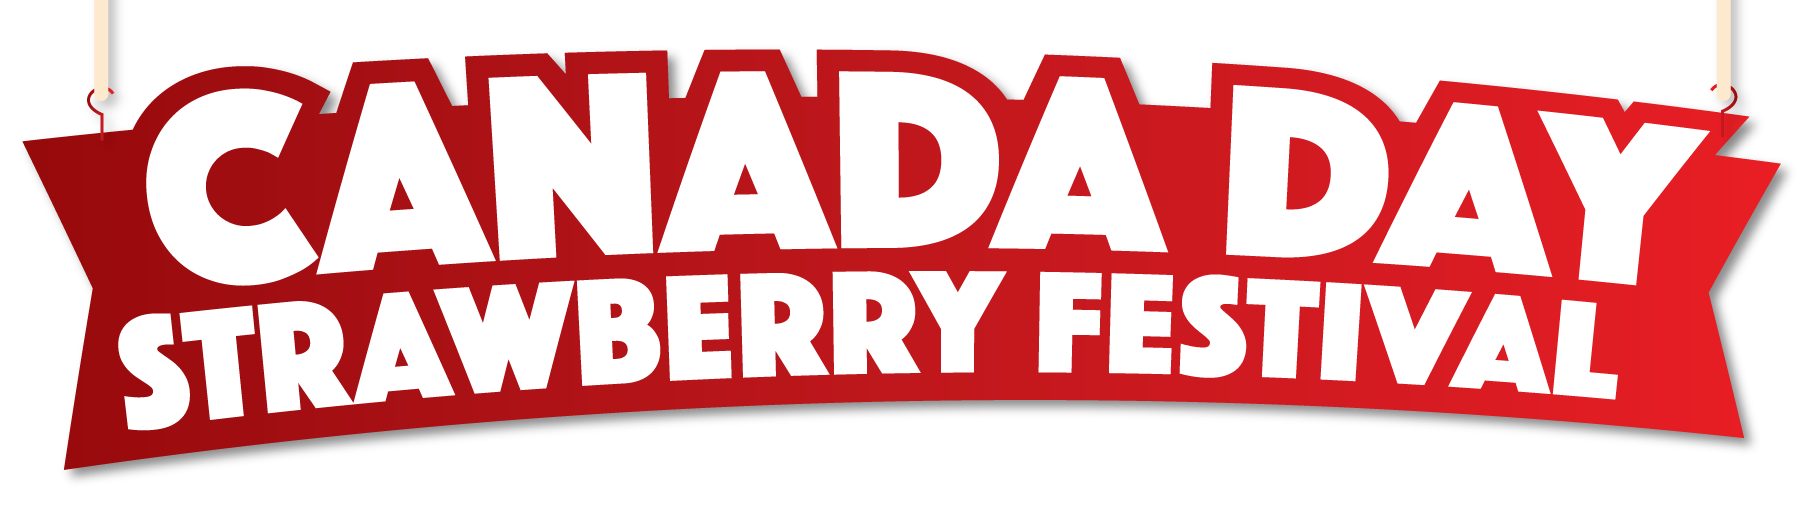 Canada Day Strawberry Festival